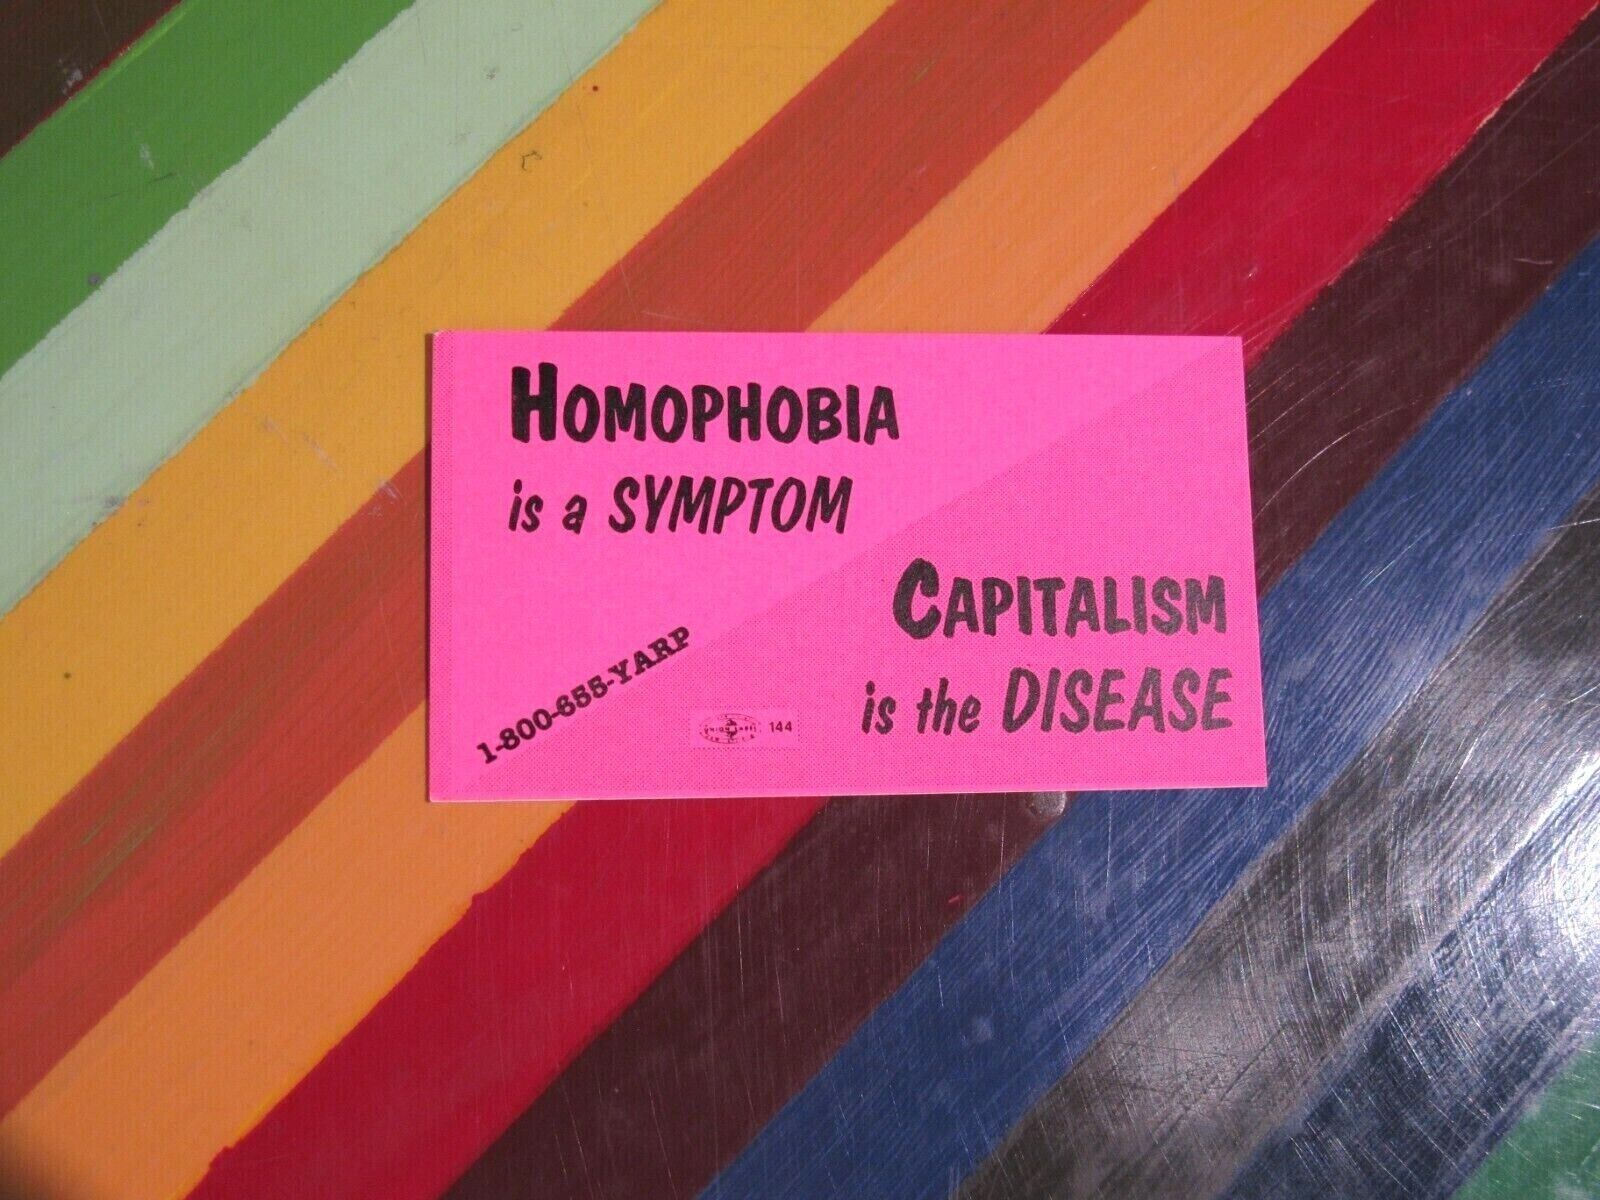 vtg gay lesbian ephemera - Homophobia Symptom Capitalism Disease sticker